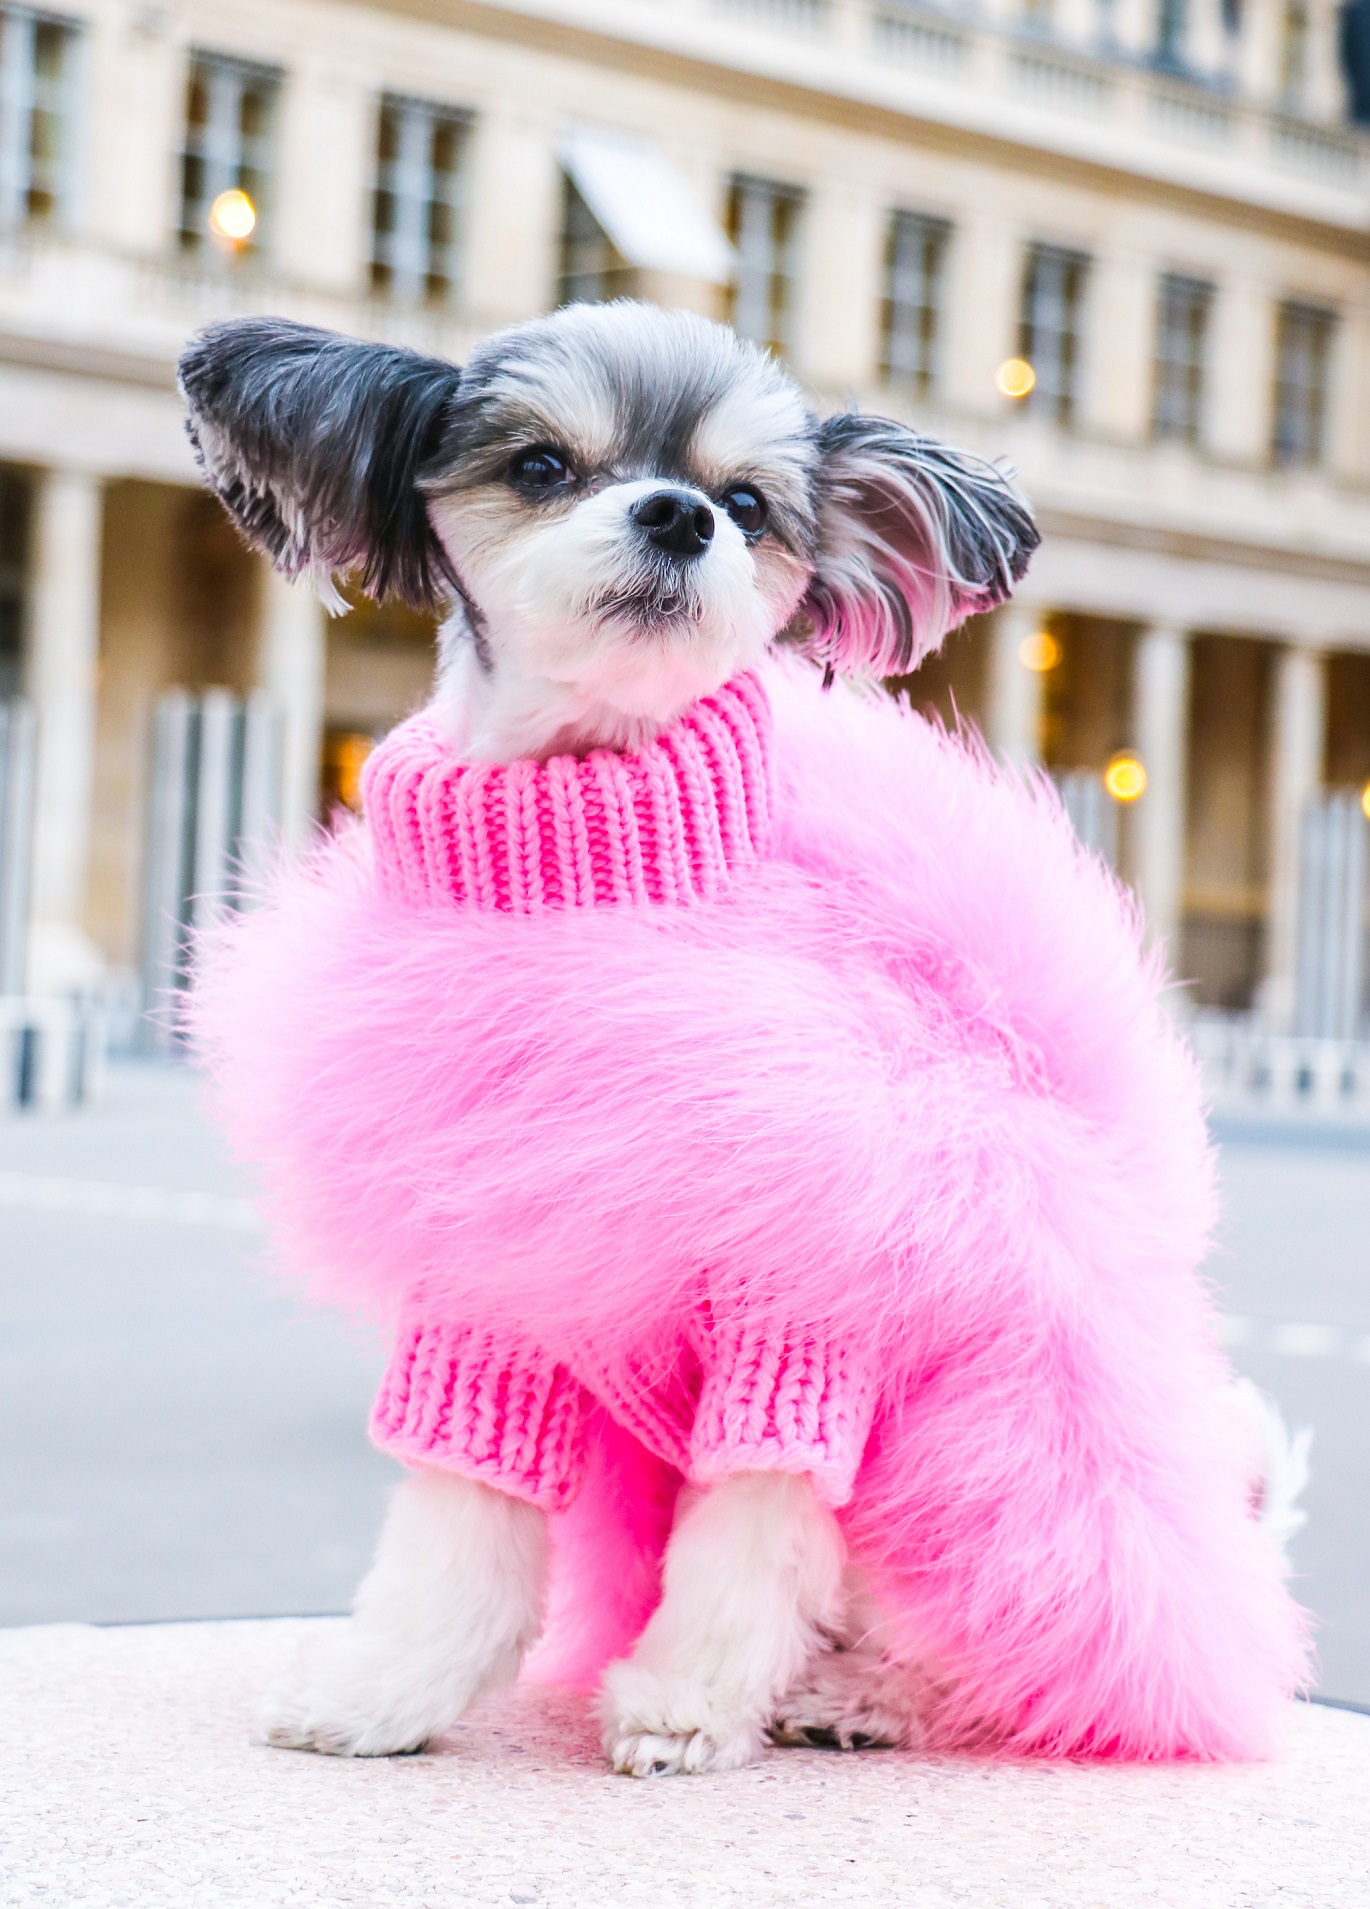 Streetwear Inspired Designer Dog Collars